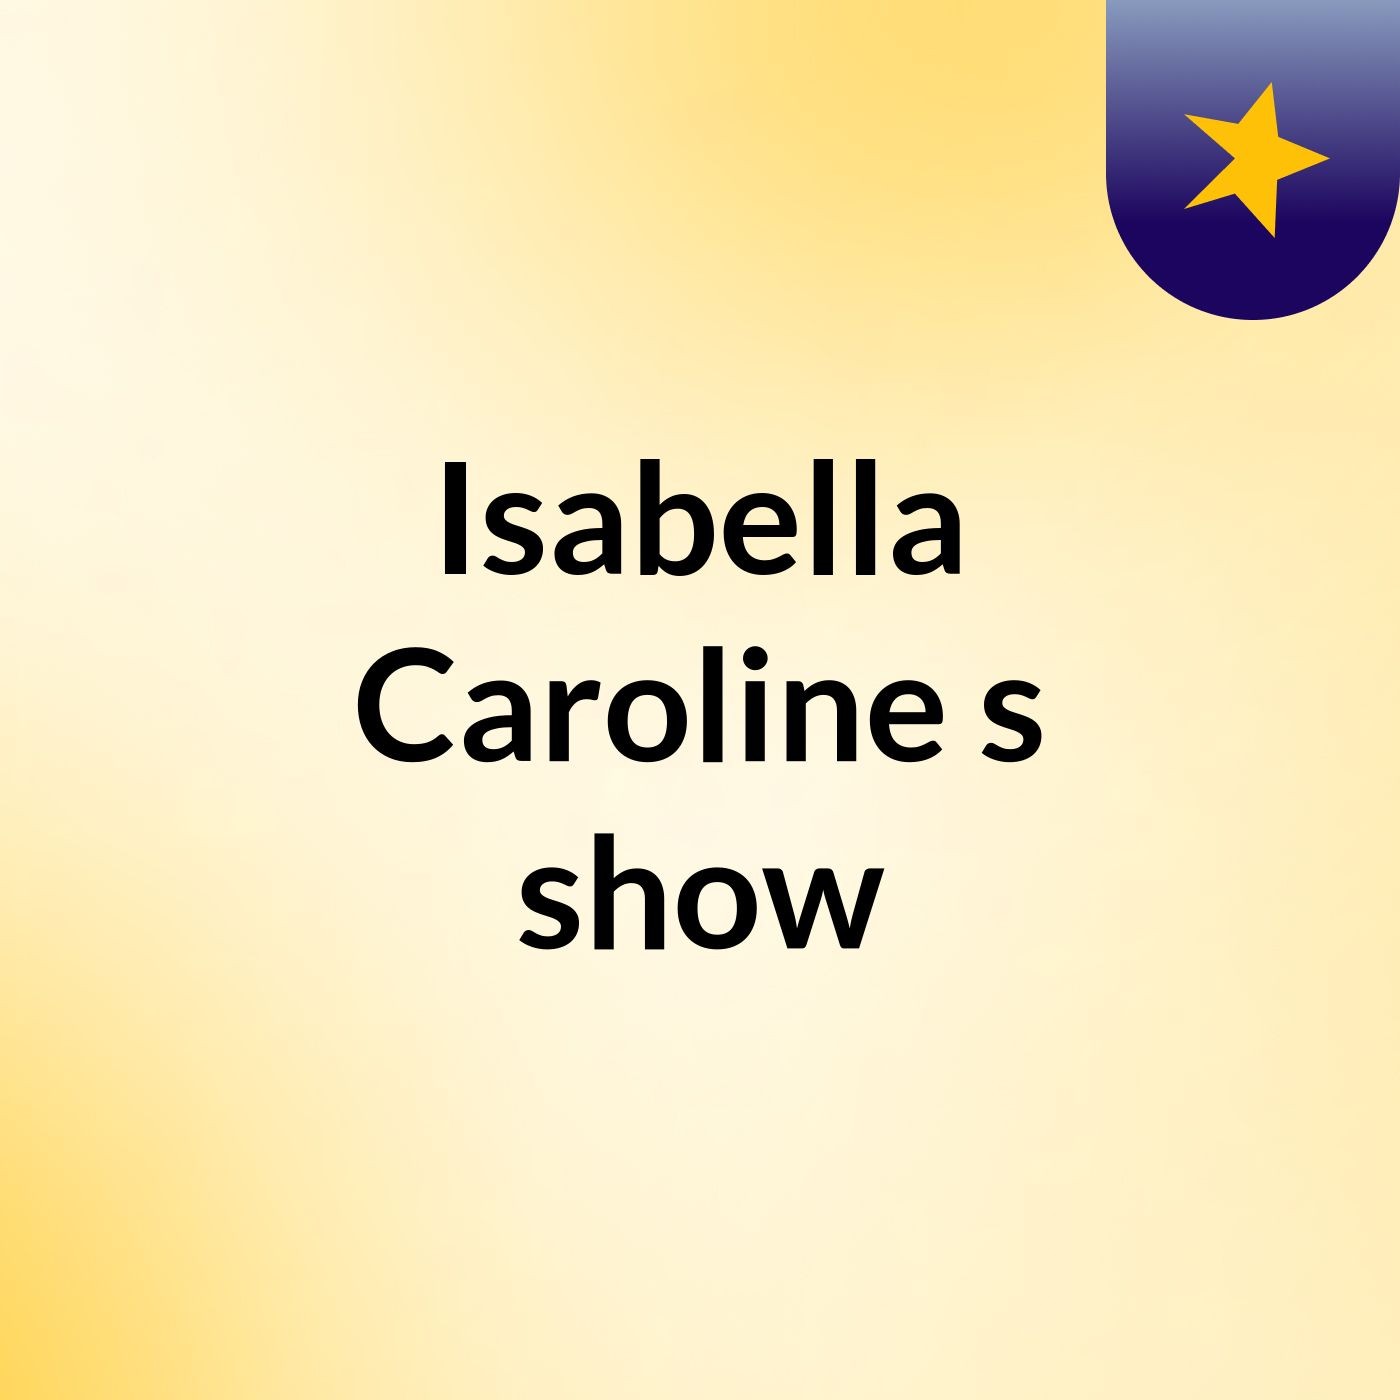 Isabella Caroline's show